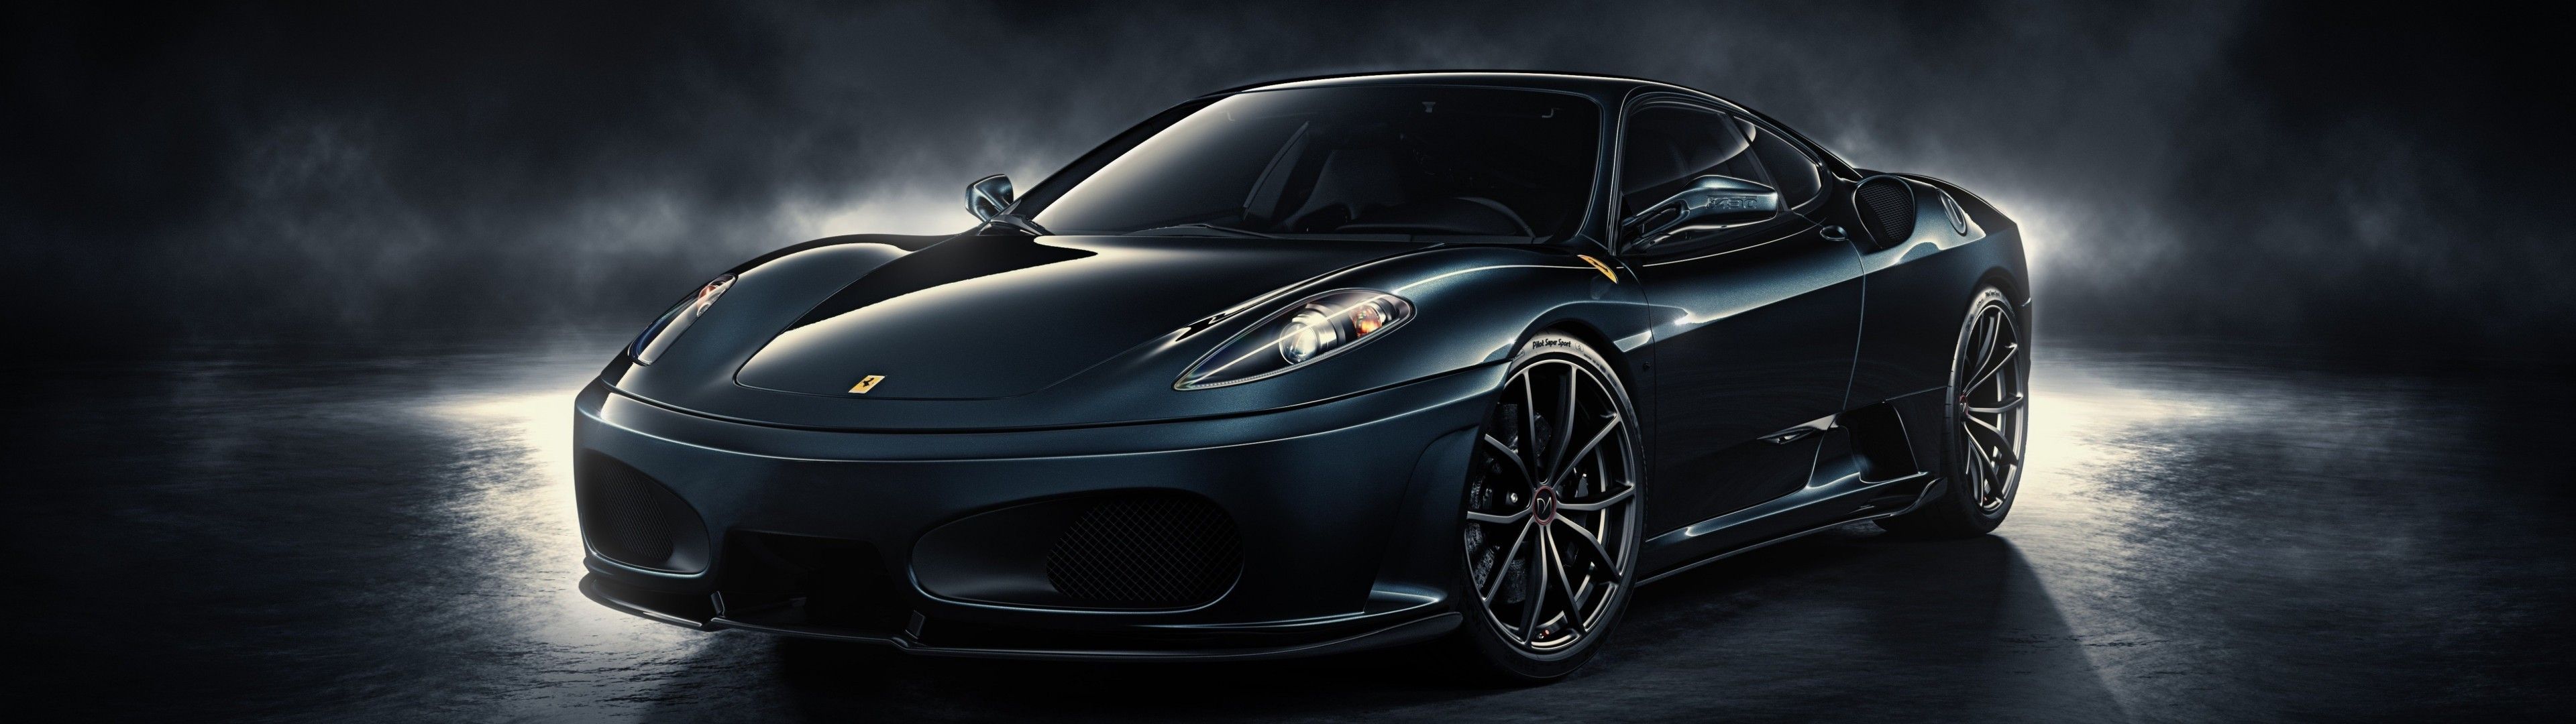 Download 3840x1080 Ferrari, Black, Fog, Lights, Front View, Cars Wallpaper